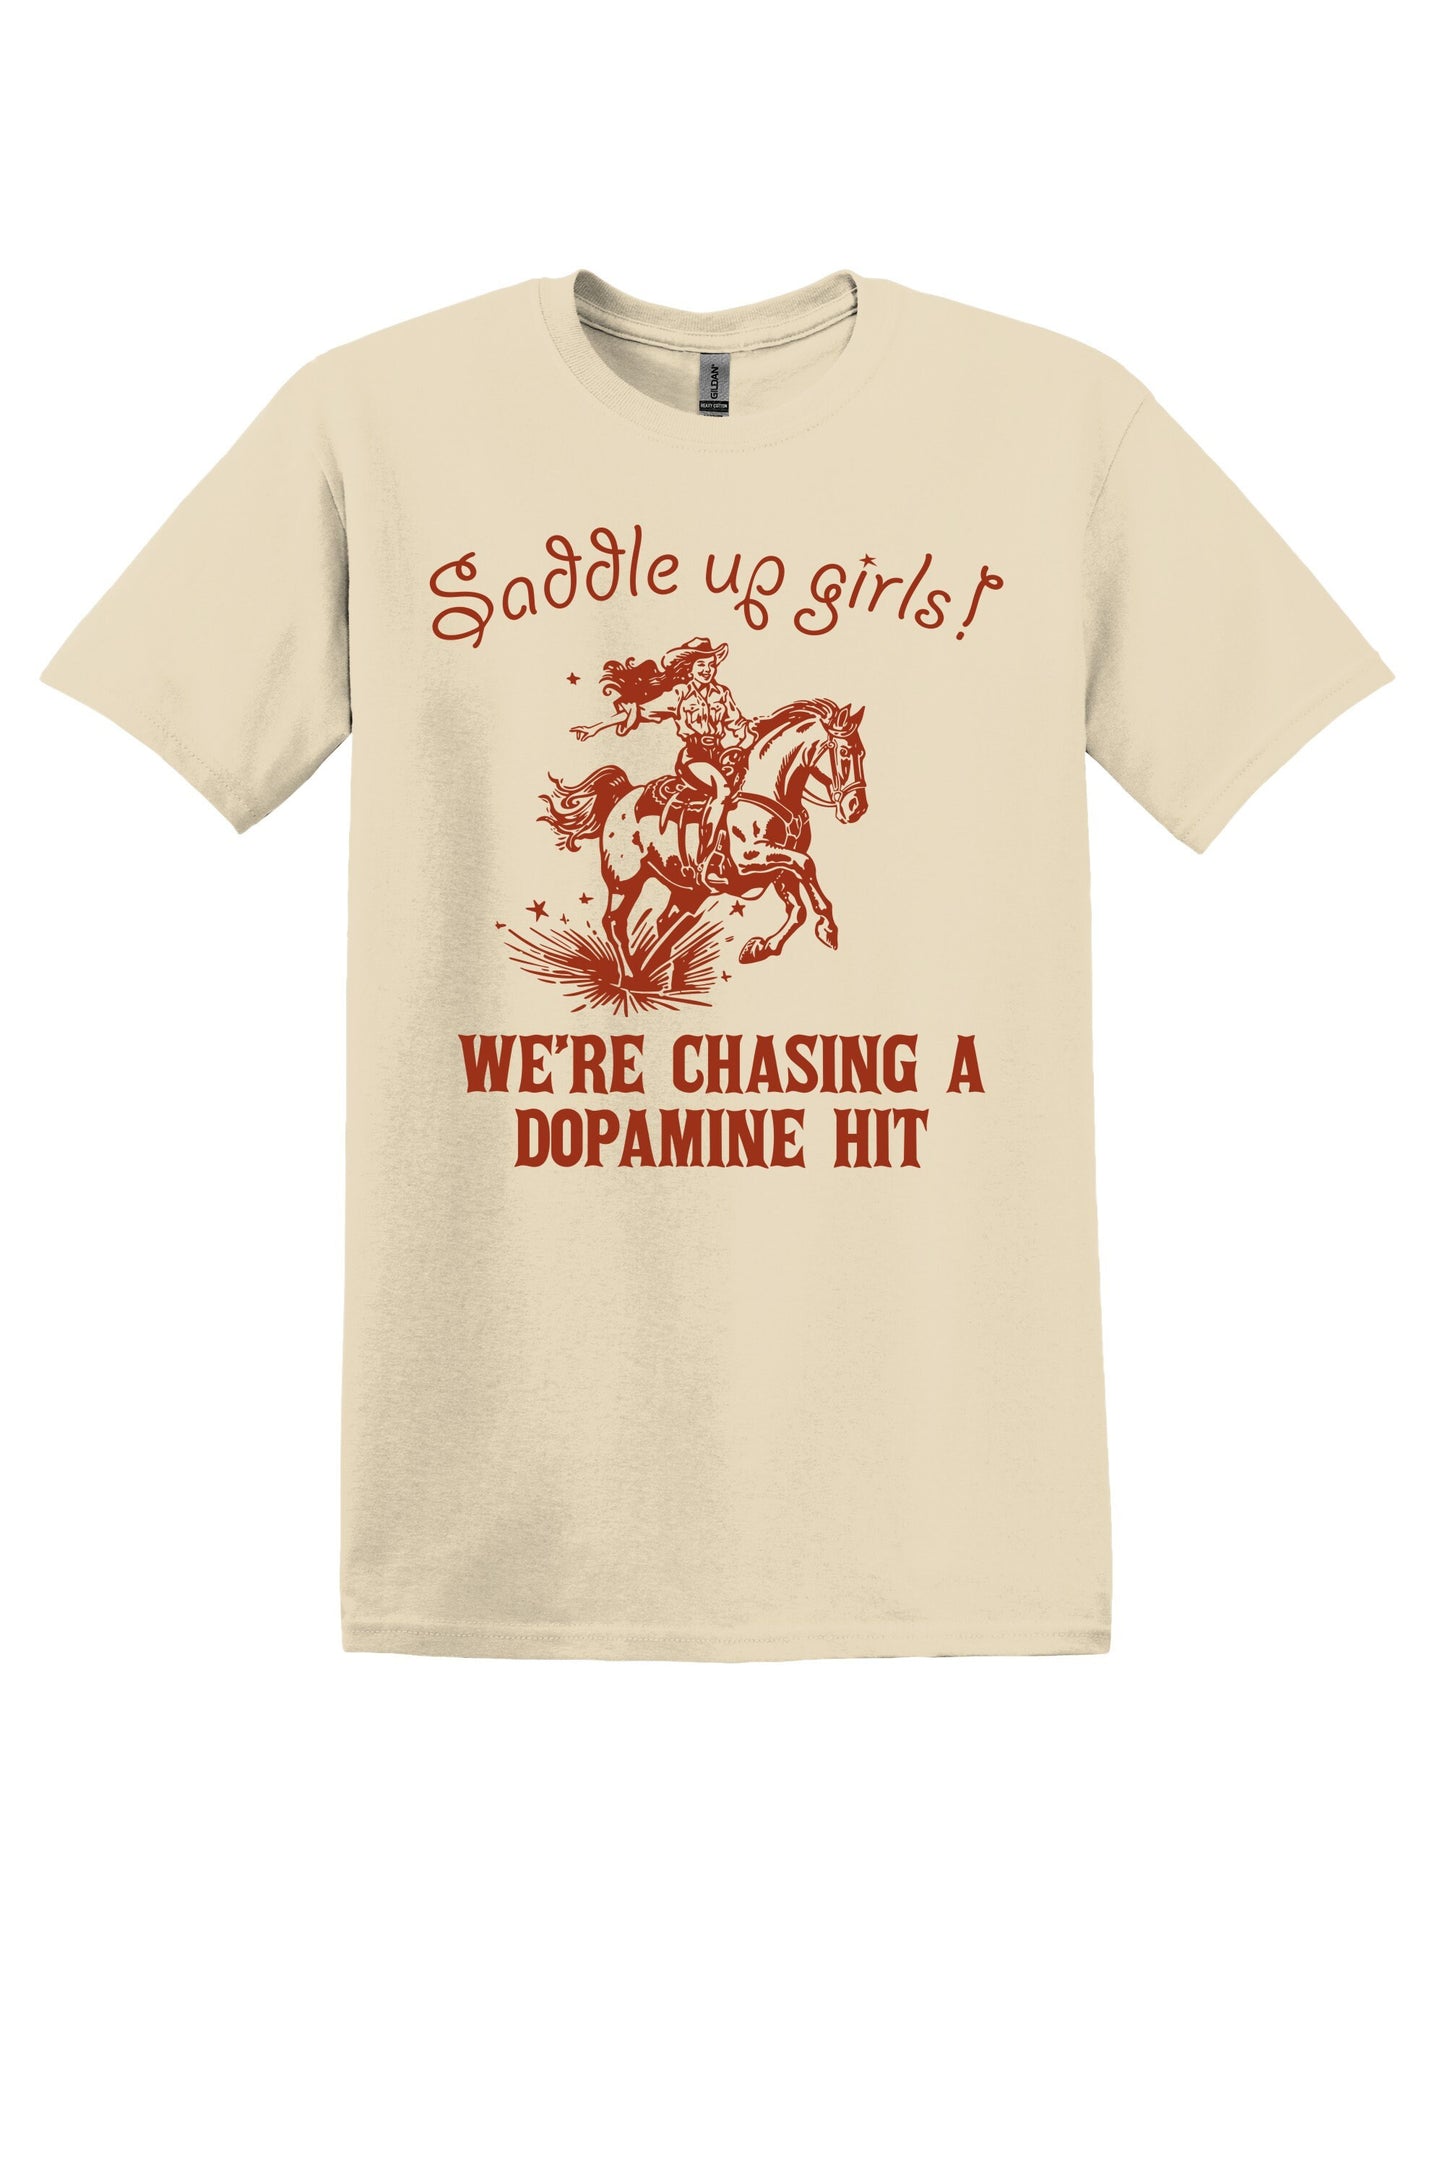 T-shirt Graphic Shirt Funny Adult TShirt Vintage Funny TShirt Nostalgia T-Shirt Relaxed Cotton Tee Saddle up Girls T-Shirt